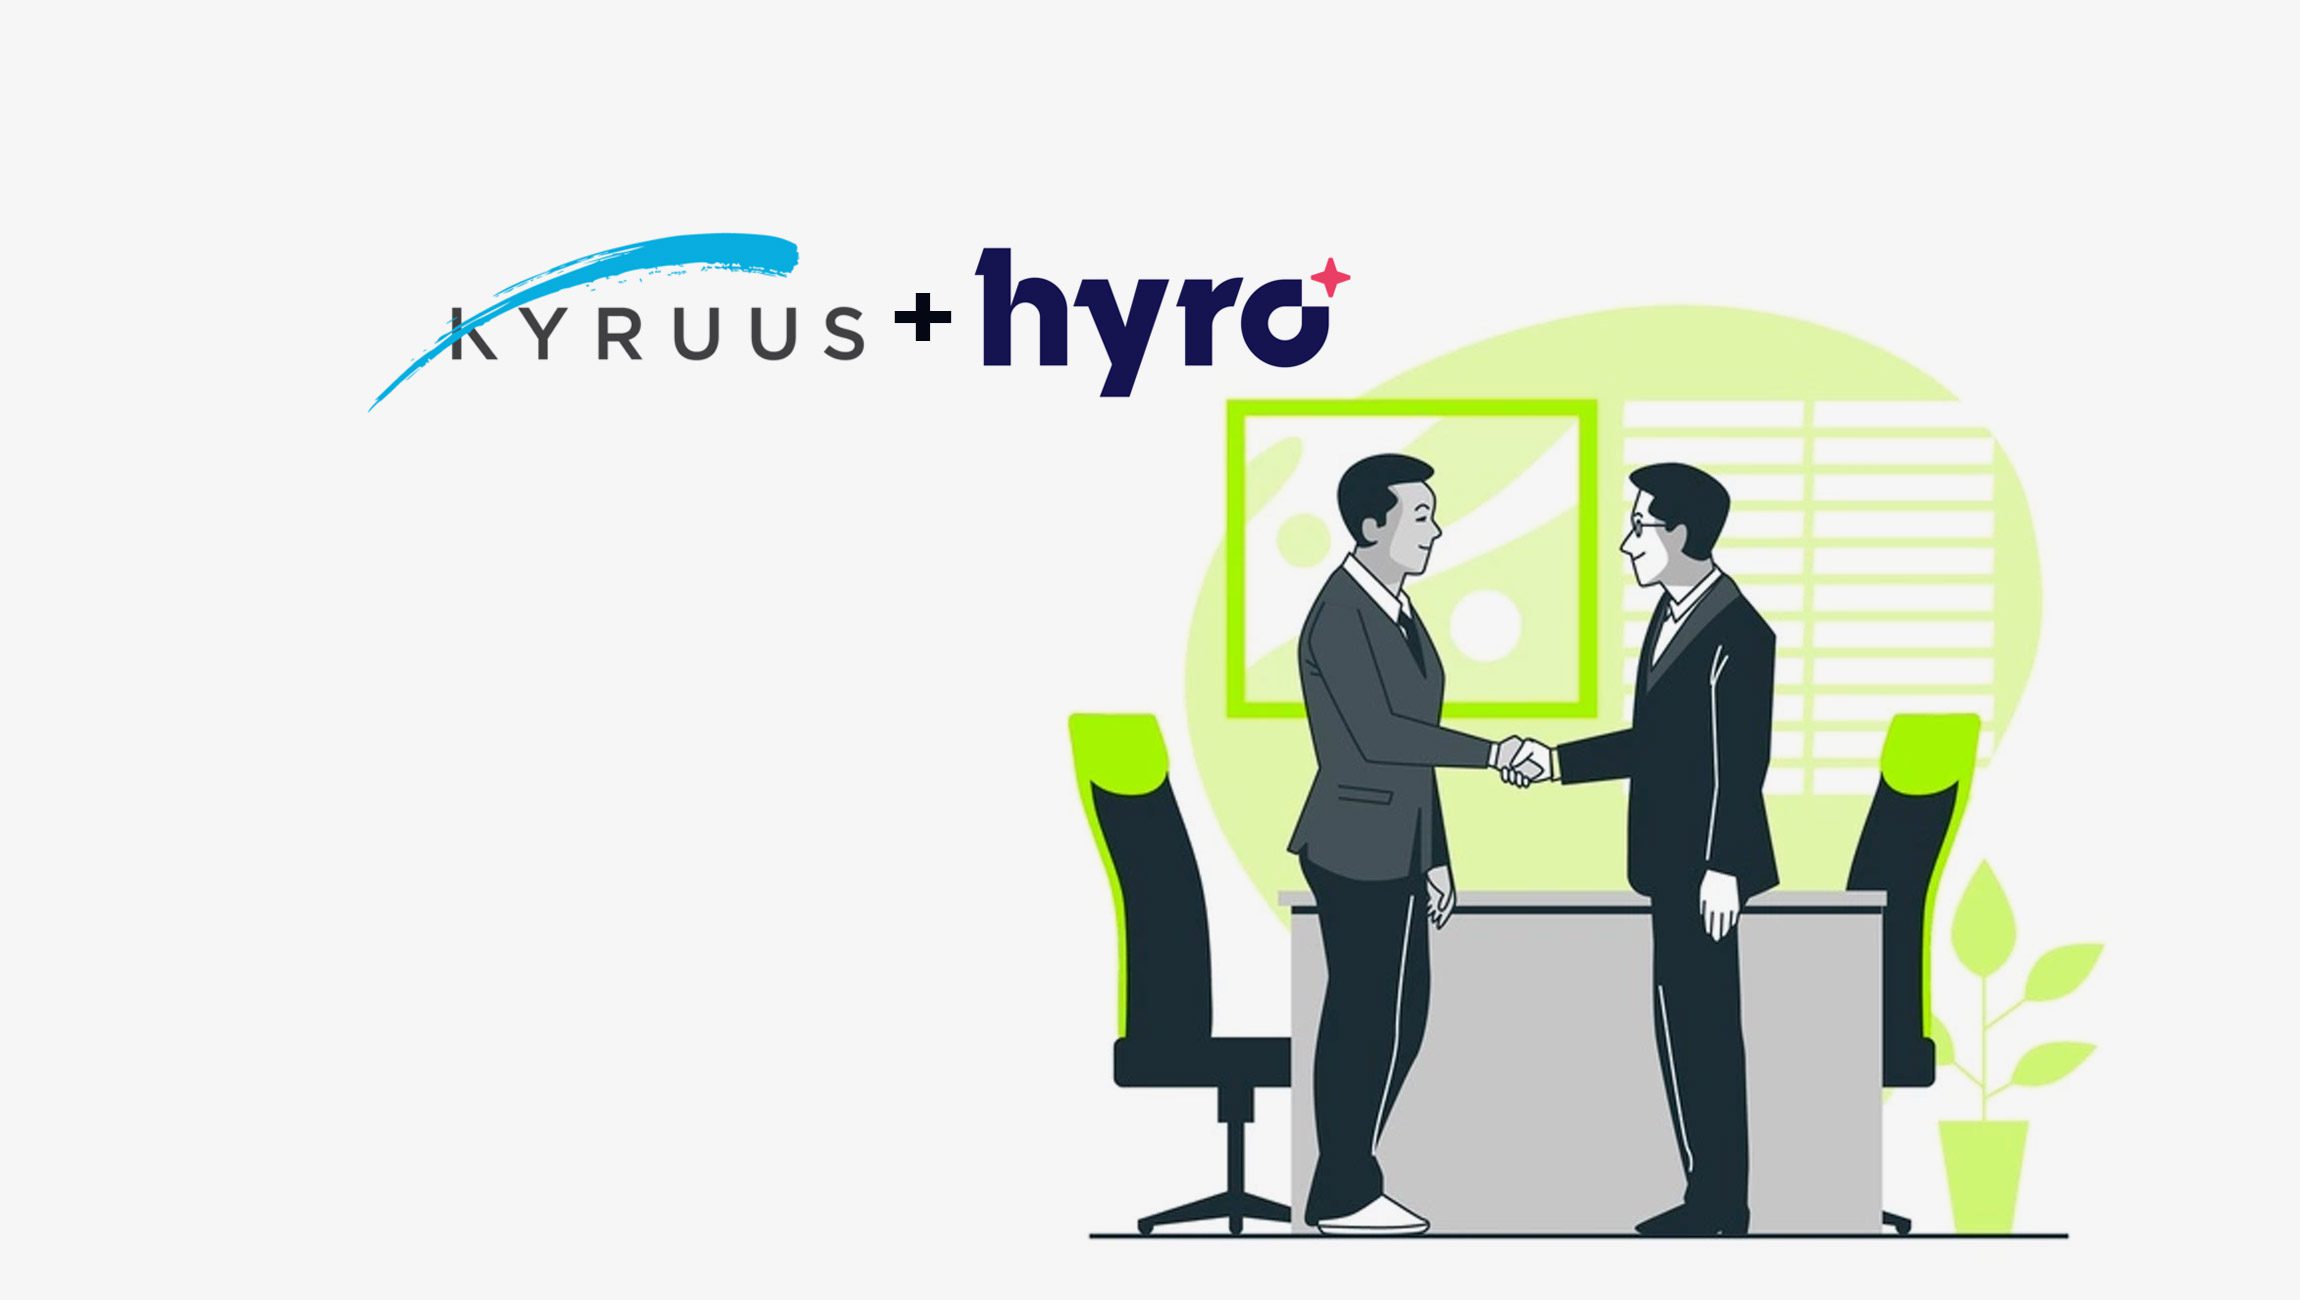 Kyruus and Hyro Form Partnership to Help Healthcare Organizations Boost Online Conversion Through Digital Self-Service